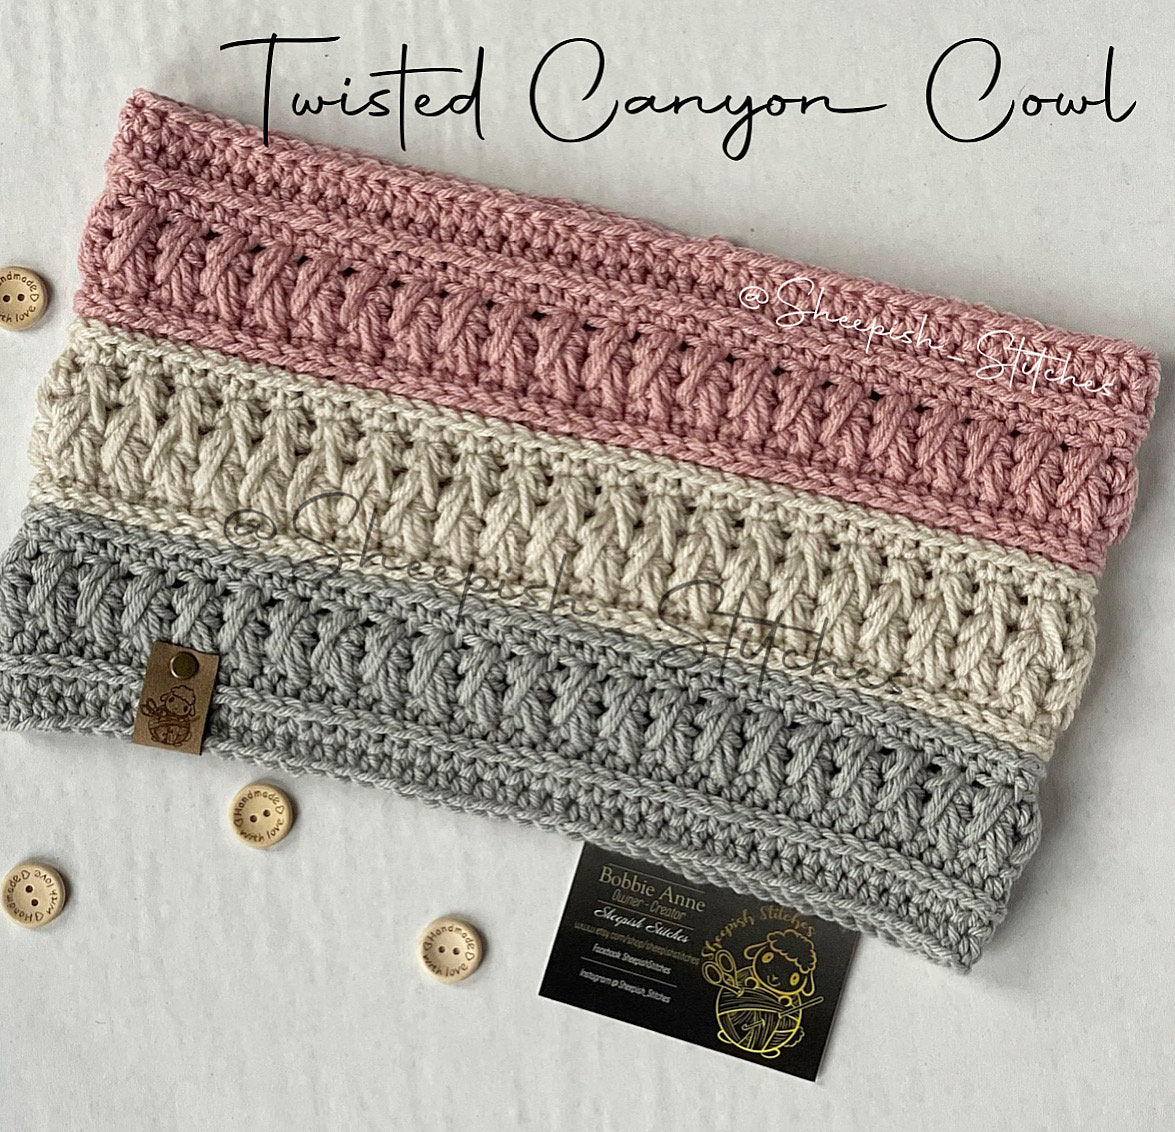 Twisted Canyon Cowl Crochet Pattern by Sheepish Stitches